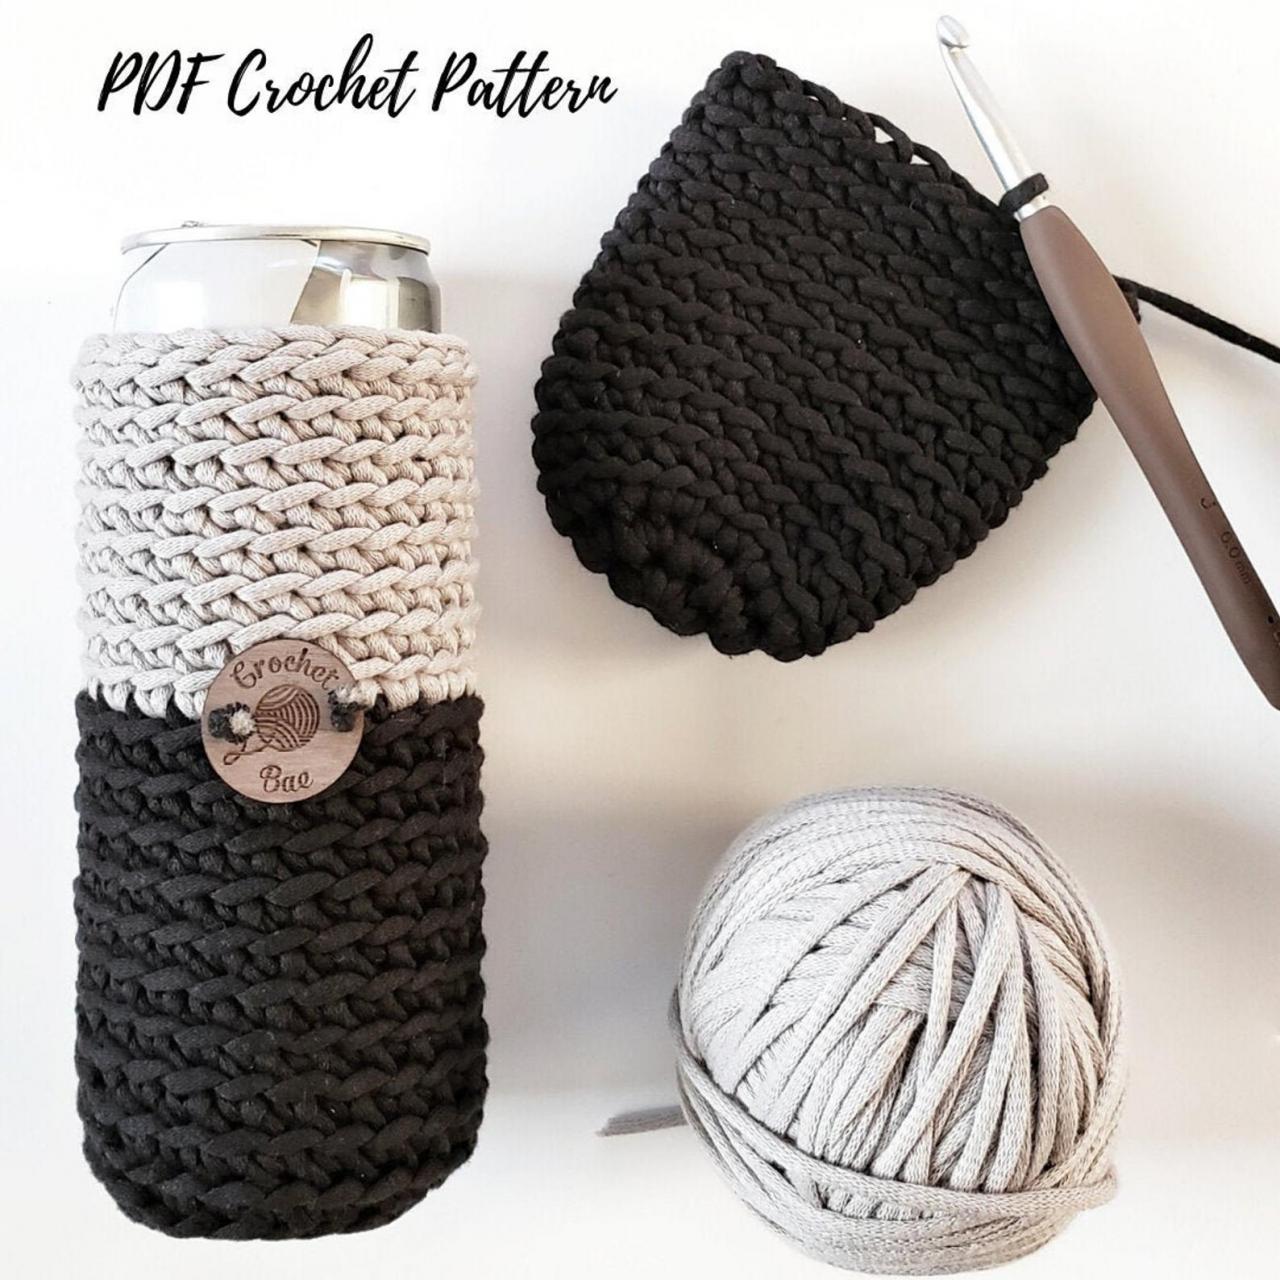 You Call It Can Cozy Crochet Pattern- Pdf Download - Can Cozy Crohet Pattern - Crochet Can Cozy Pattern - Crochet Cozy Pattern